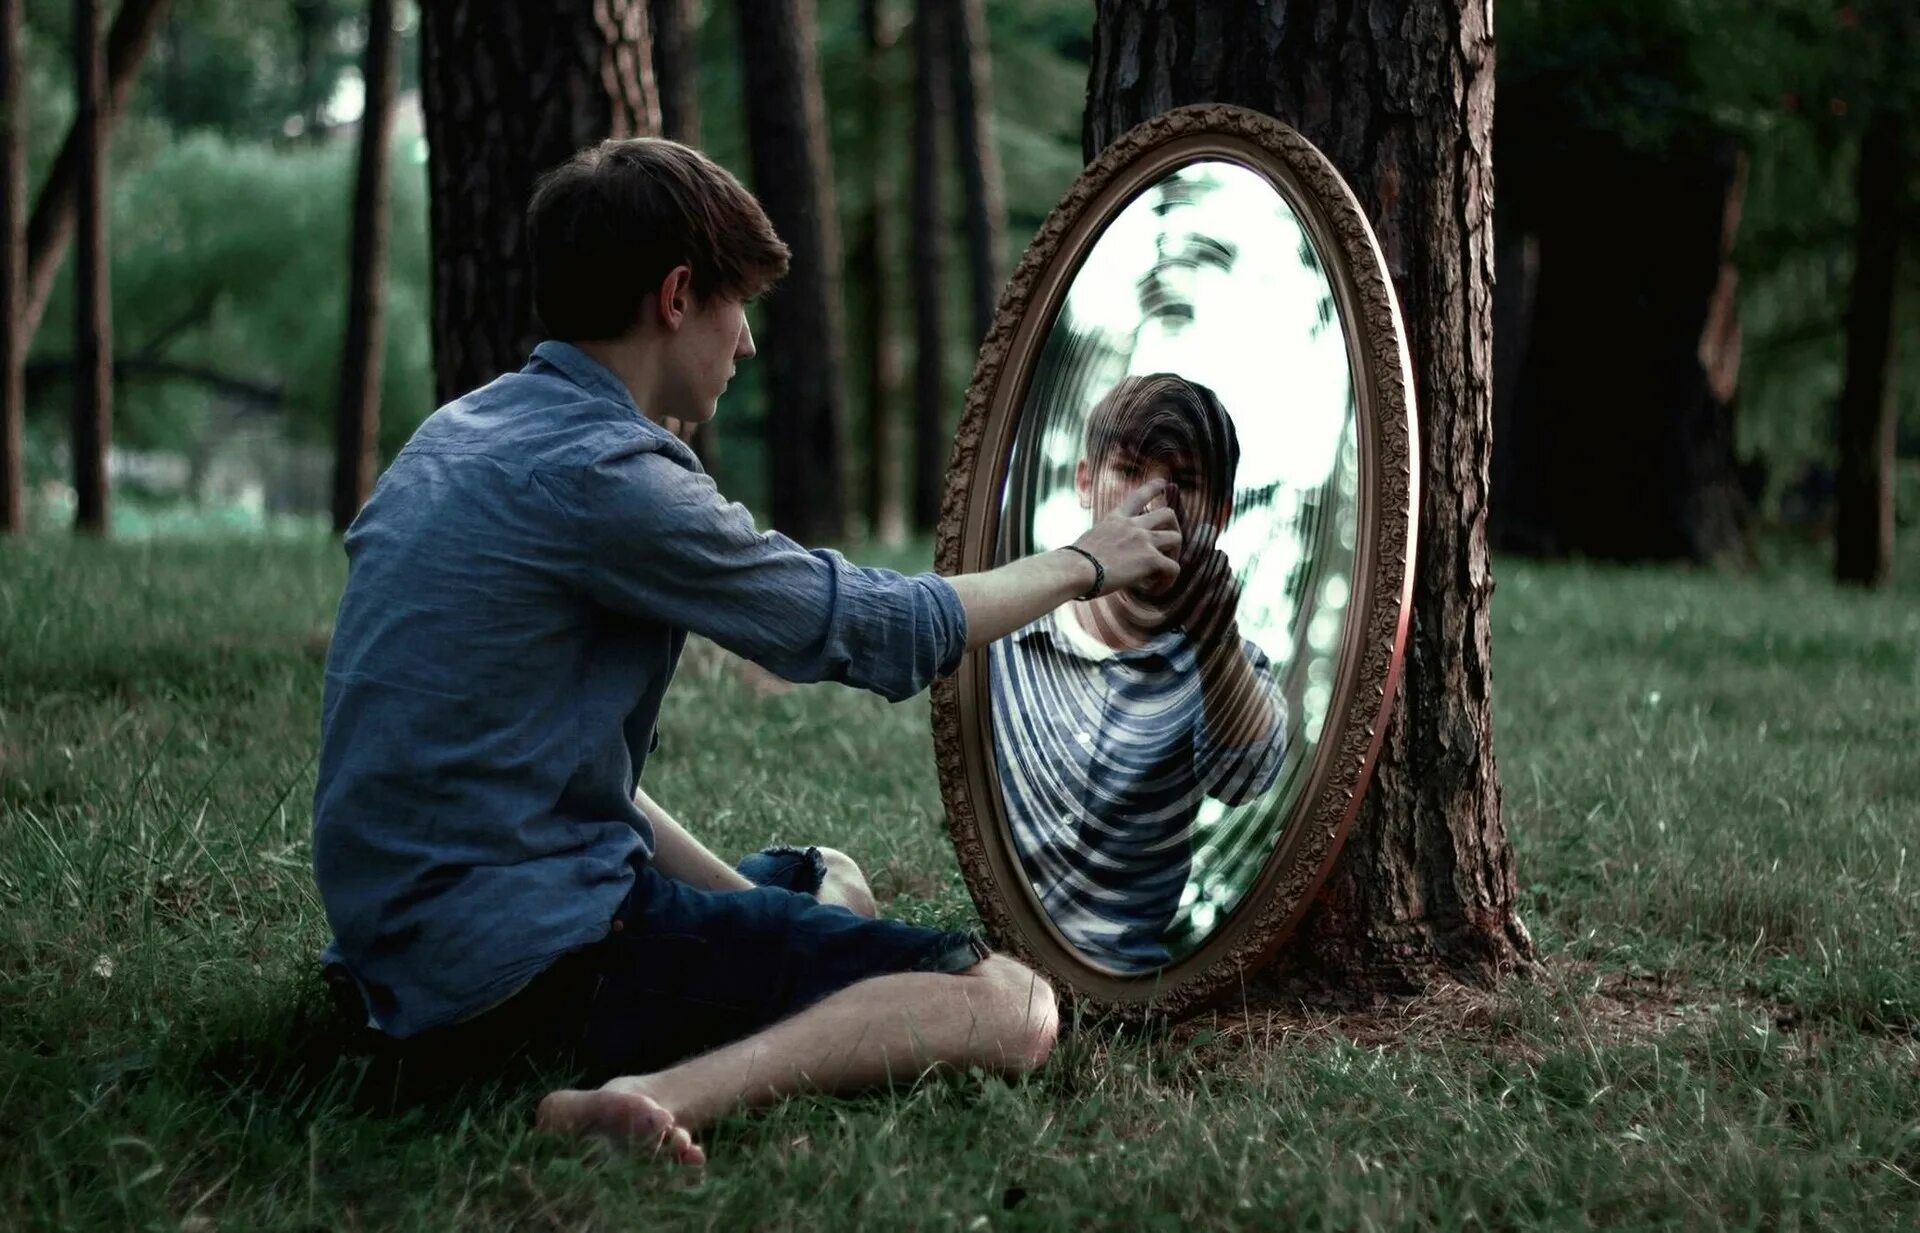 Отражение в зеркале. Человек в зеркале. Фотосет с зеркалом. Отражение человека в зеркале. Glimpse of your reflection